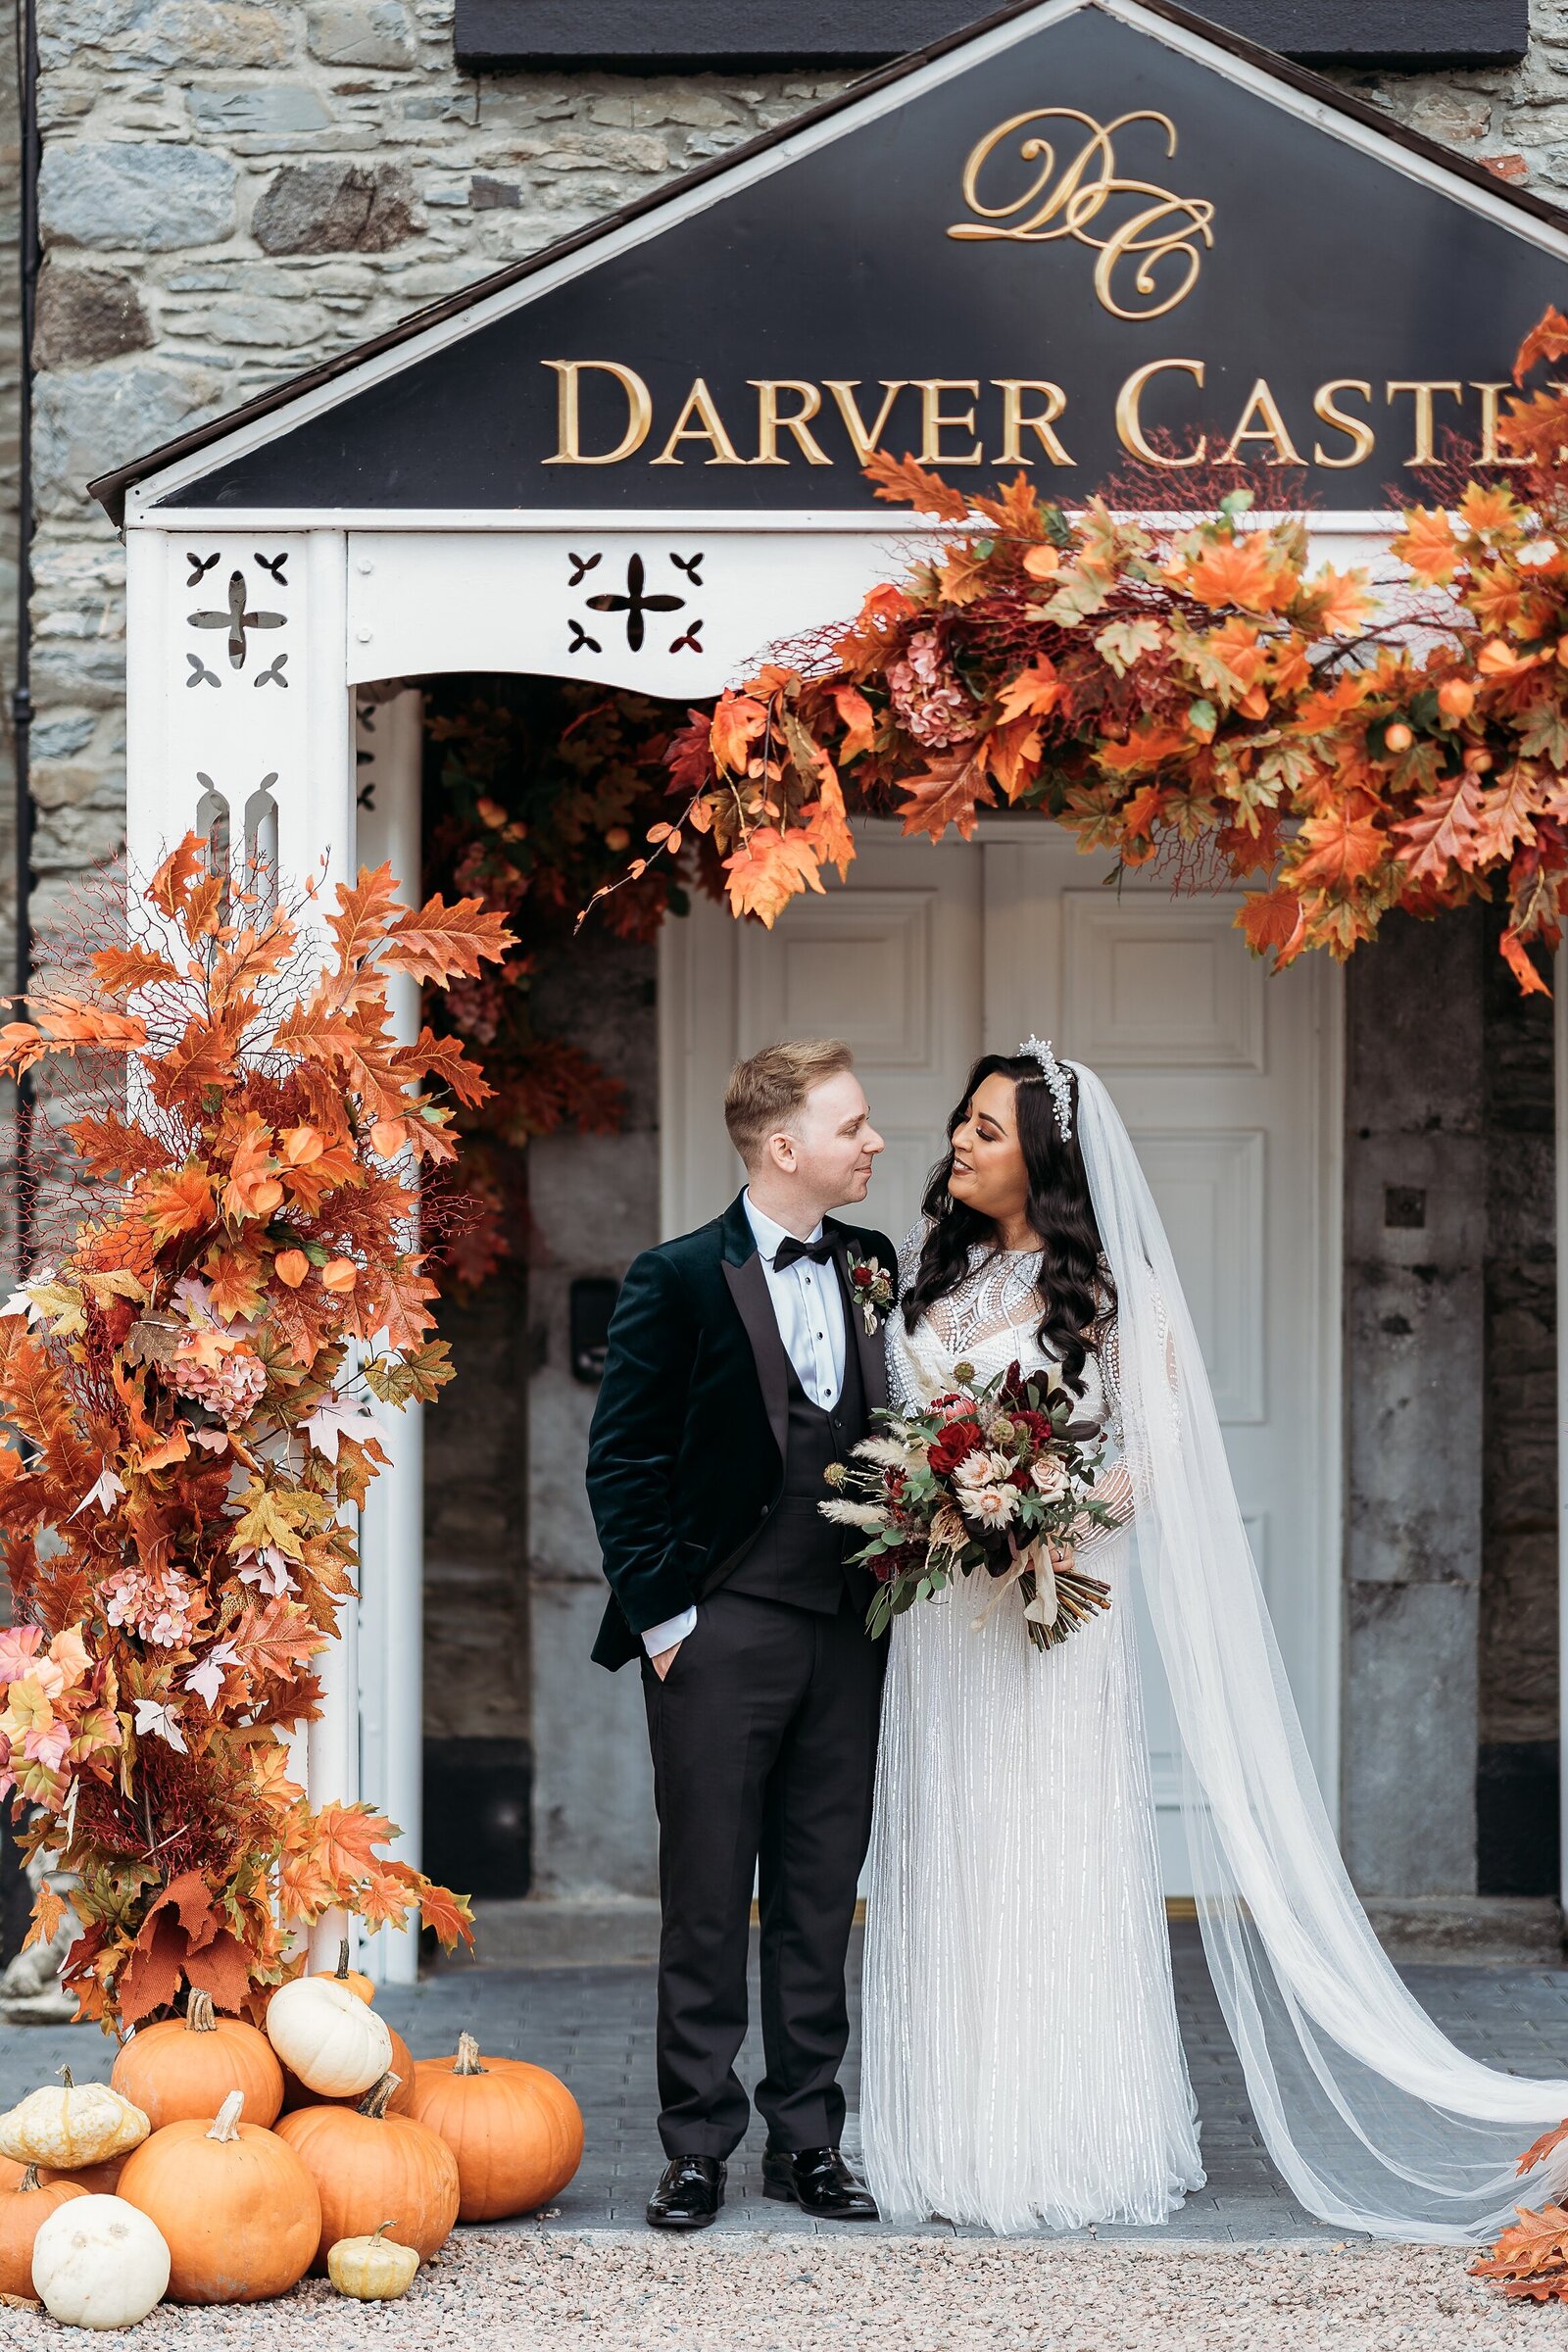 Darver Castle Autumn Wedding Photos County Louth Dundalk (2)